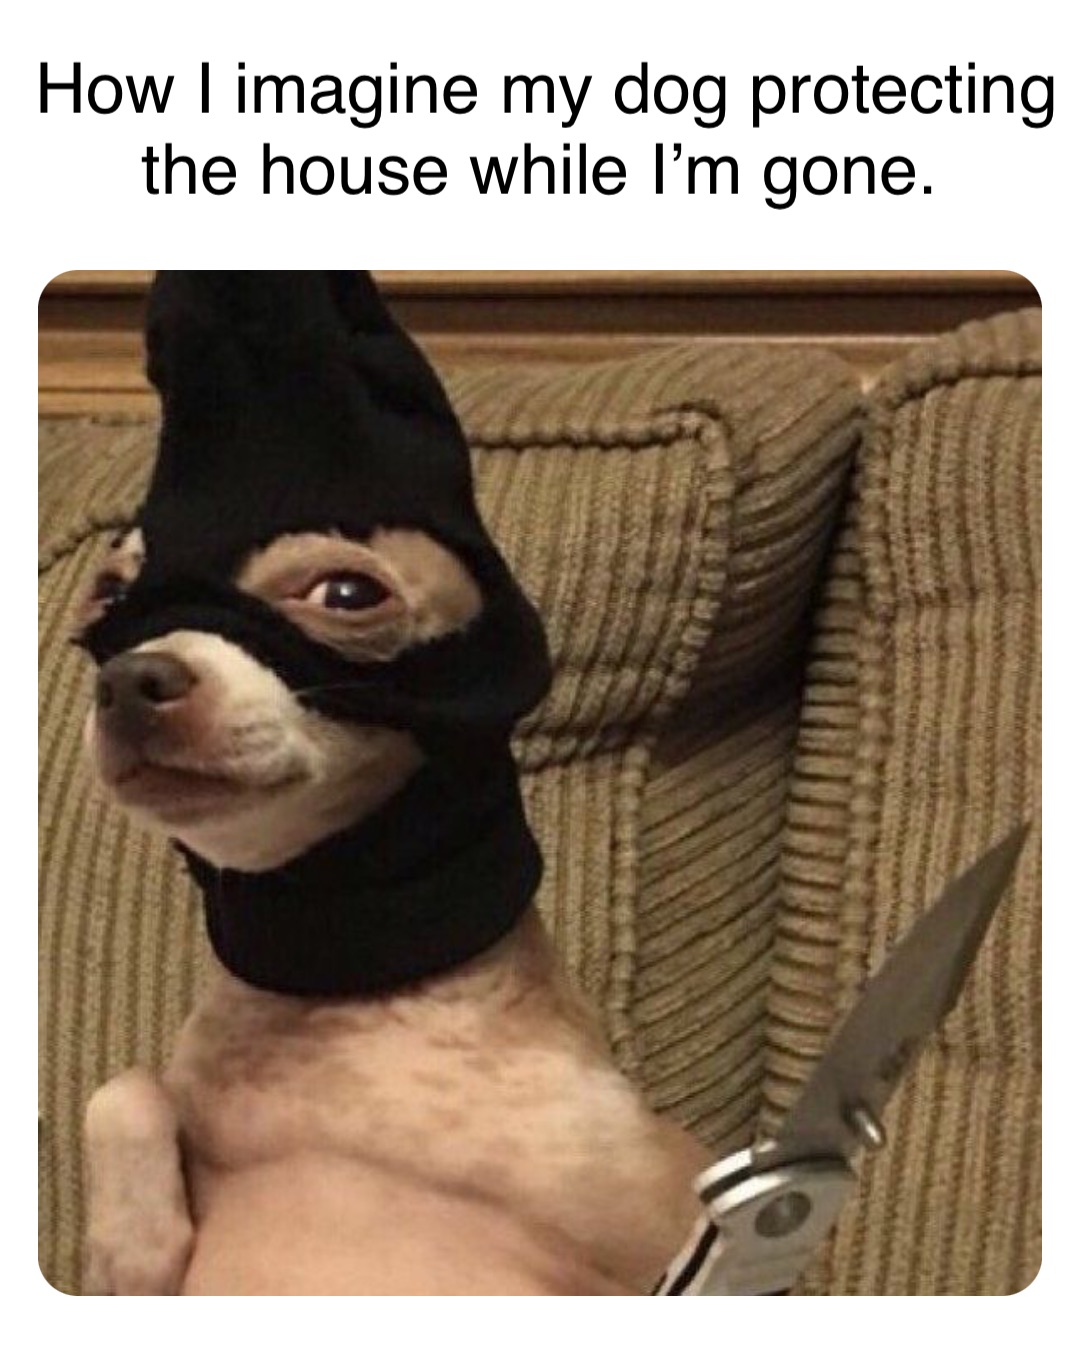 How I imagine my dog protecting the house while I’m gone.